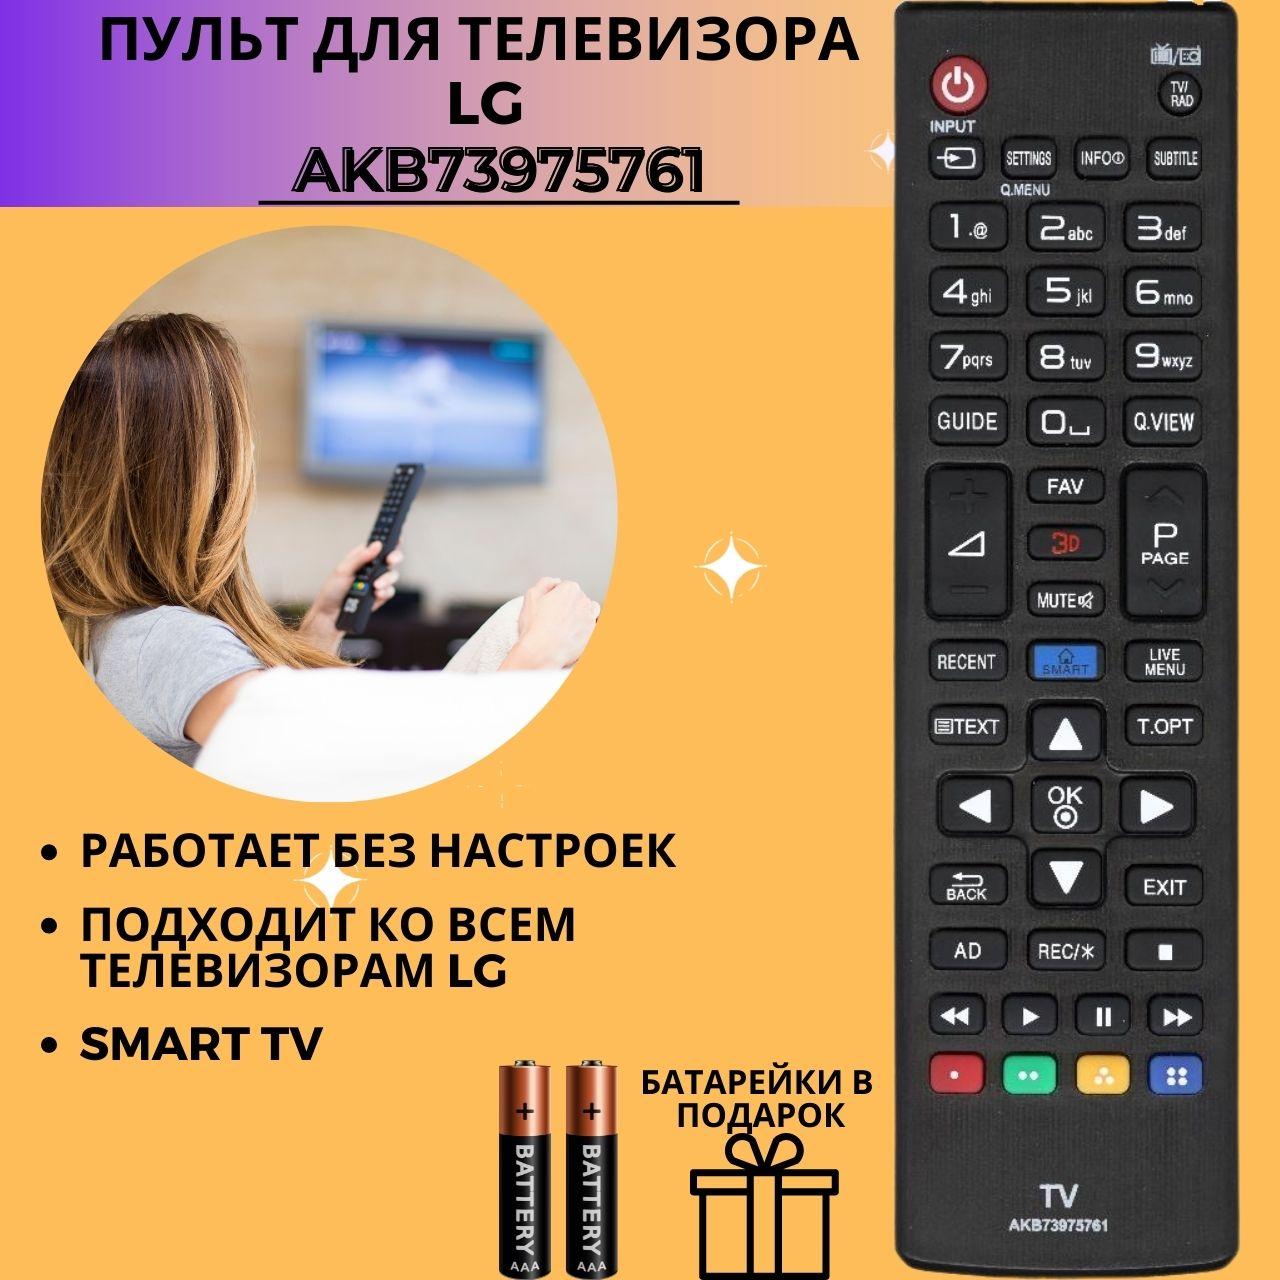 Пульт телевизионный LG AKB73975761 ic new 3D LCD TV SMART